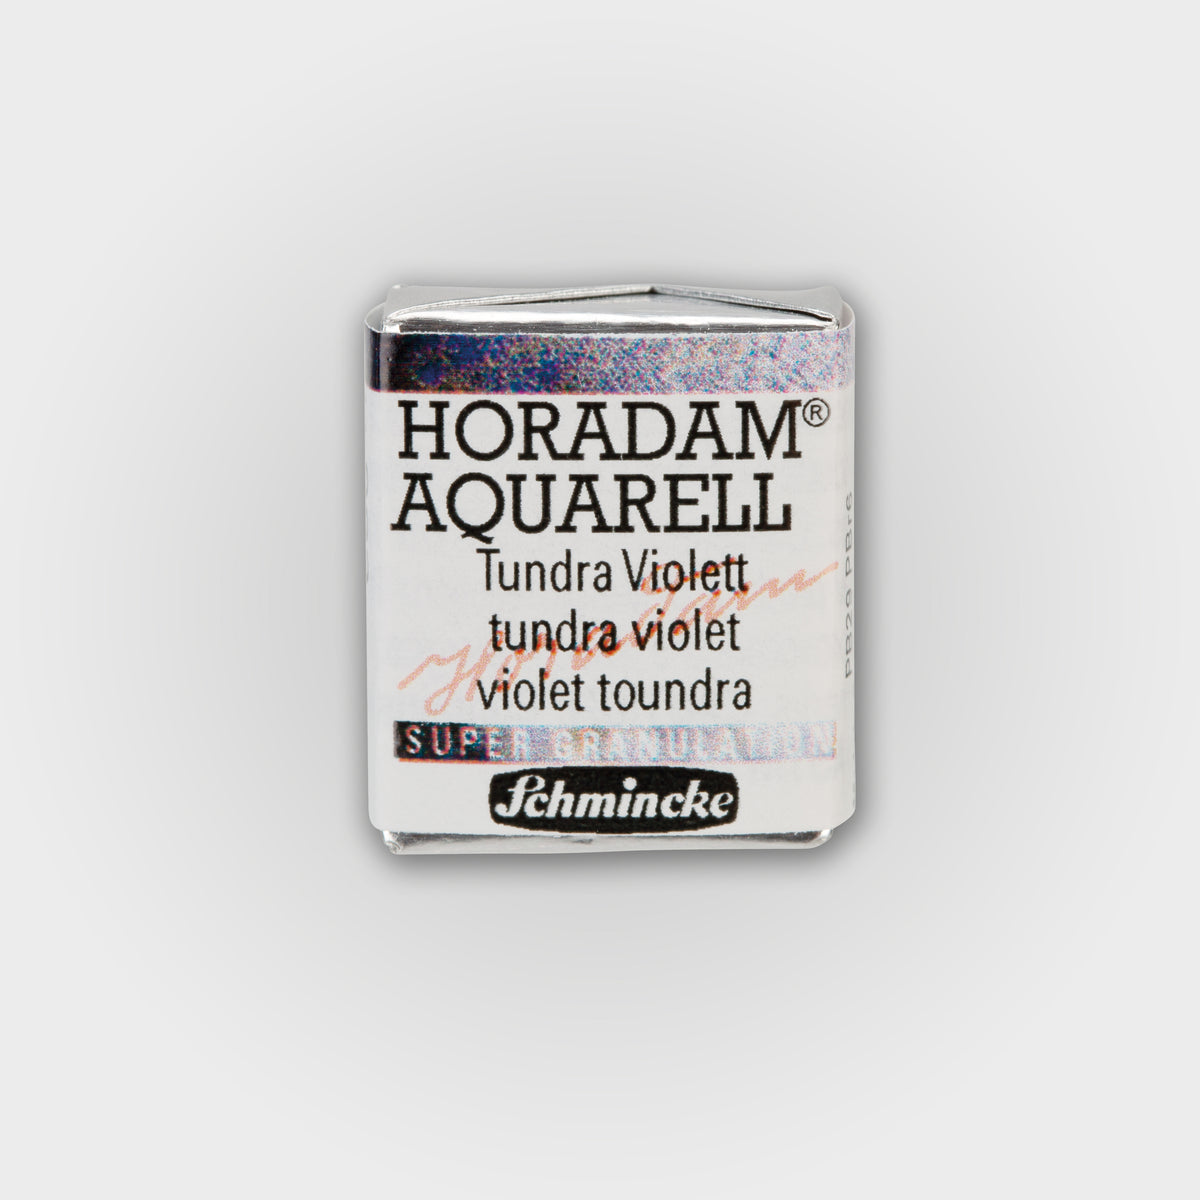 Schmincke Horadam® Super granulating Half pan 983 Tundra violet